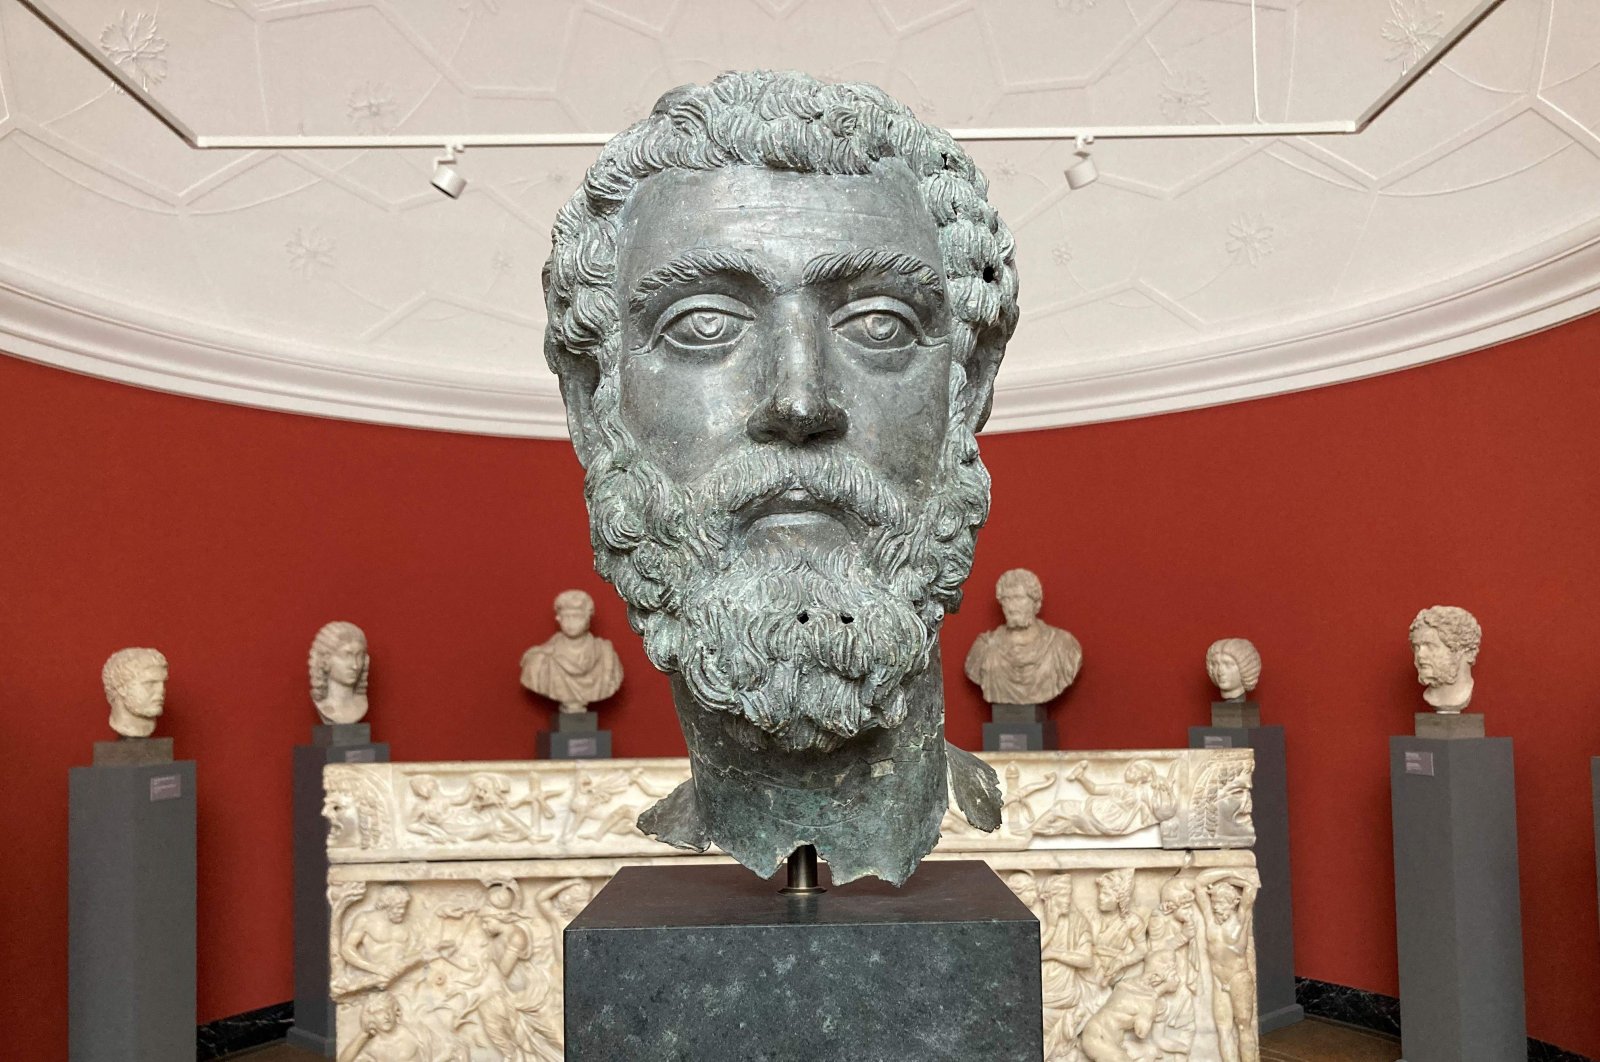 Kepala perunggu Kaisar Severus memicu sengketa museum Türkiye-Denmark